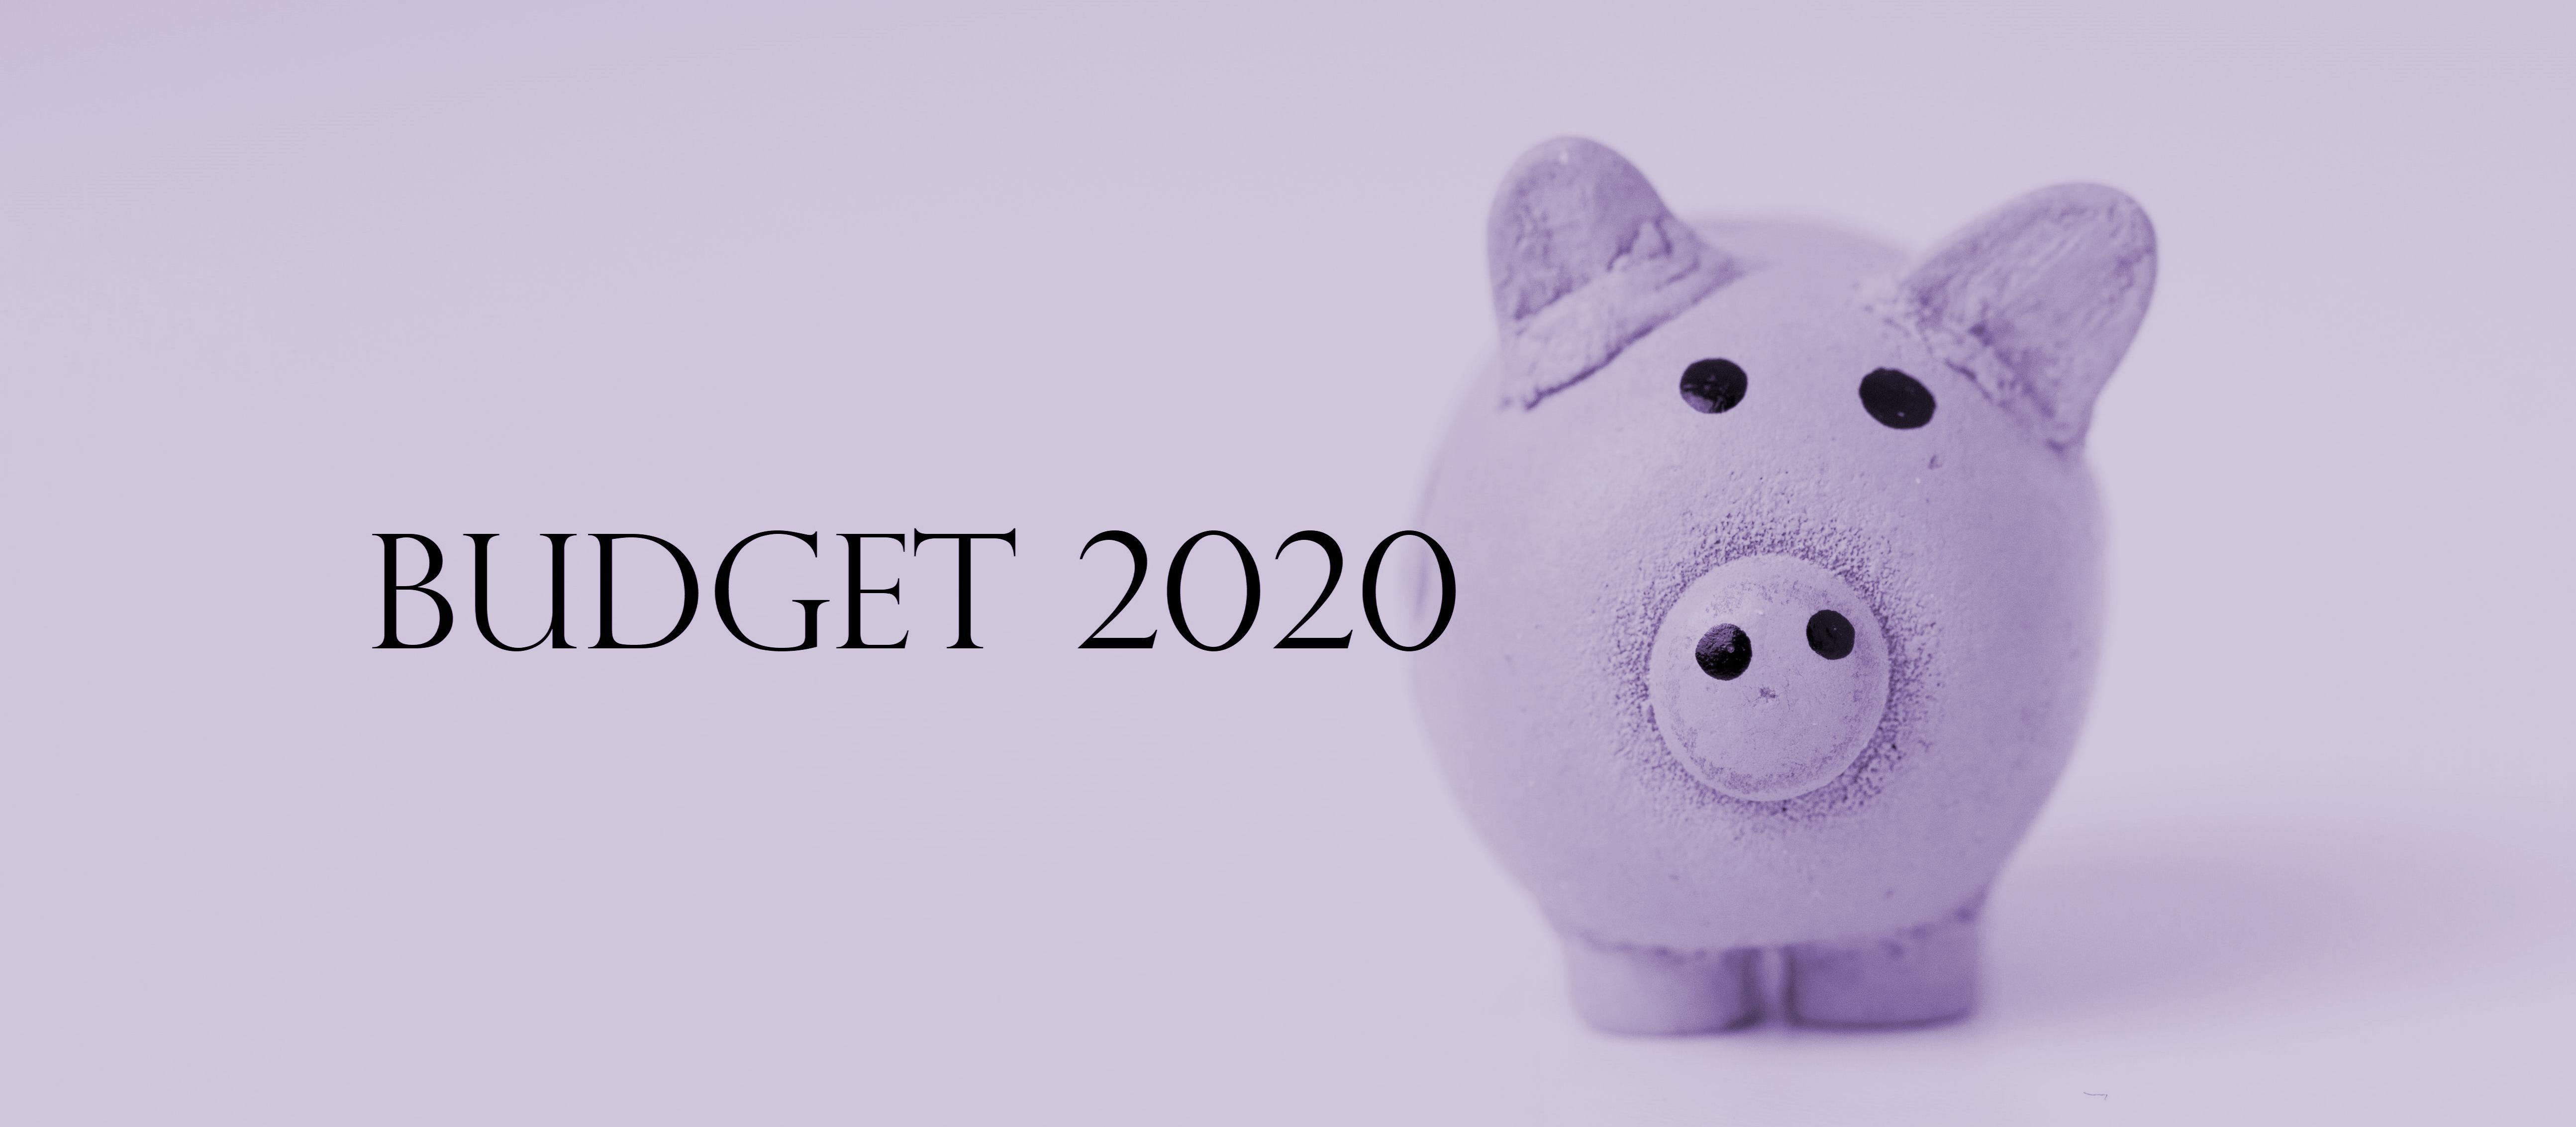 Budget 2020 Piggy_purple